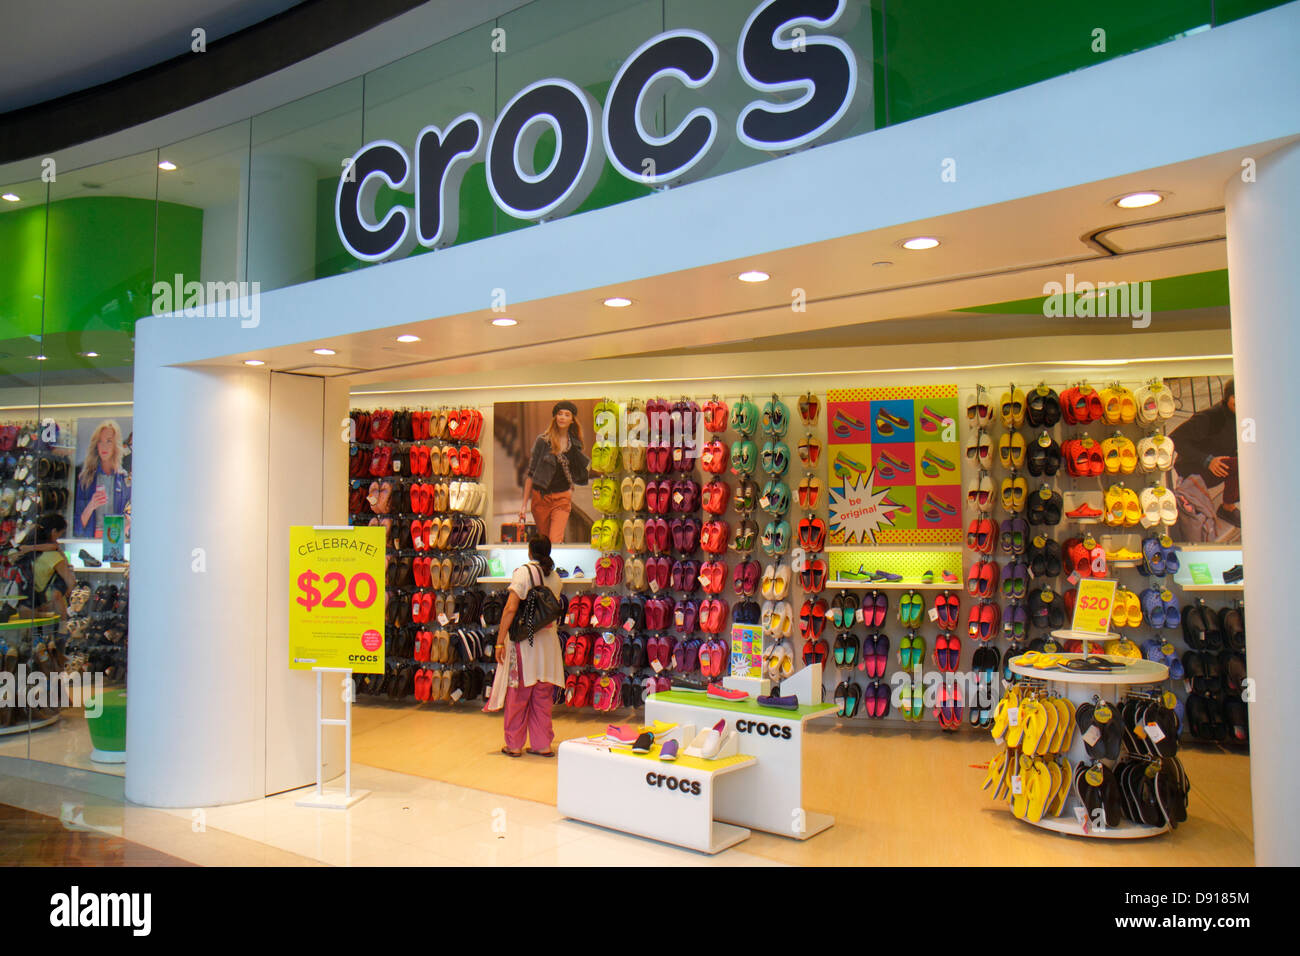 shops that sell crocs